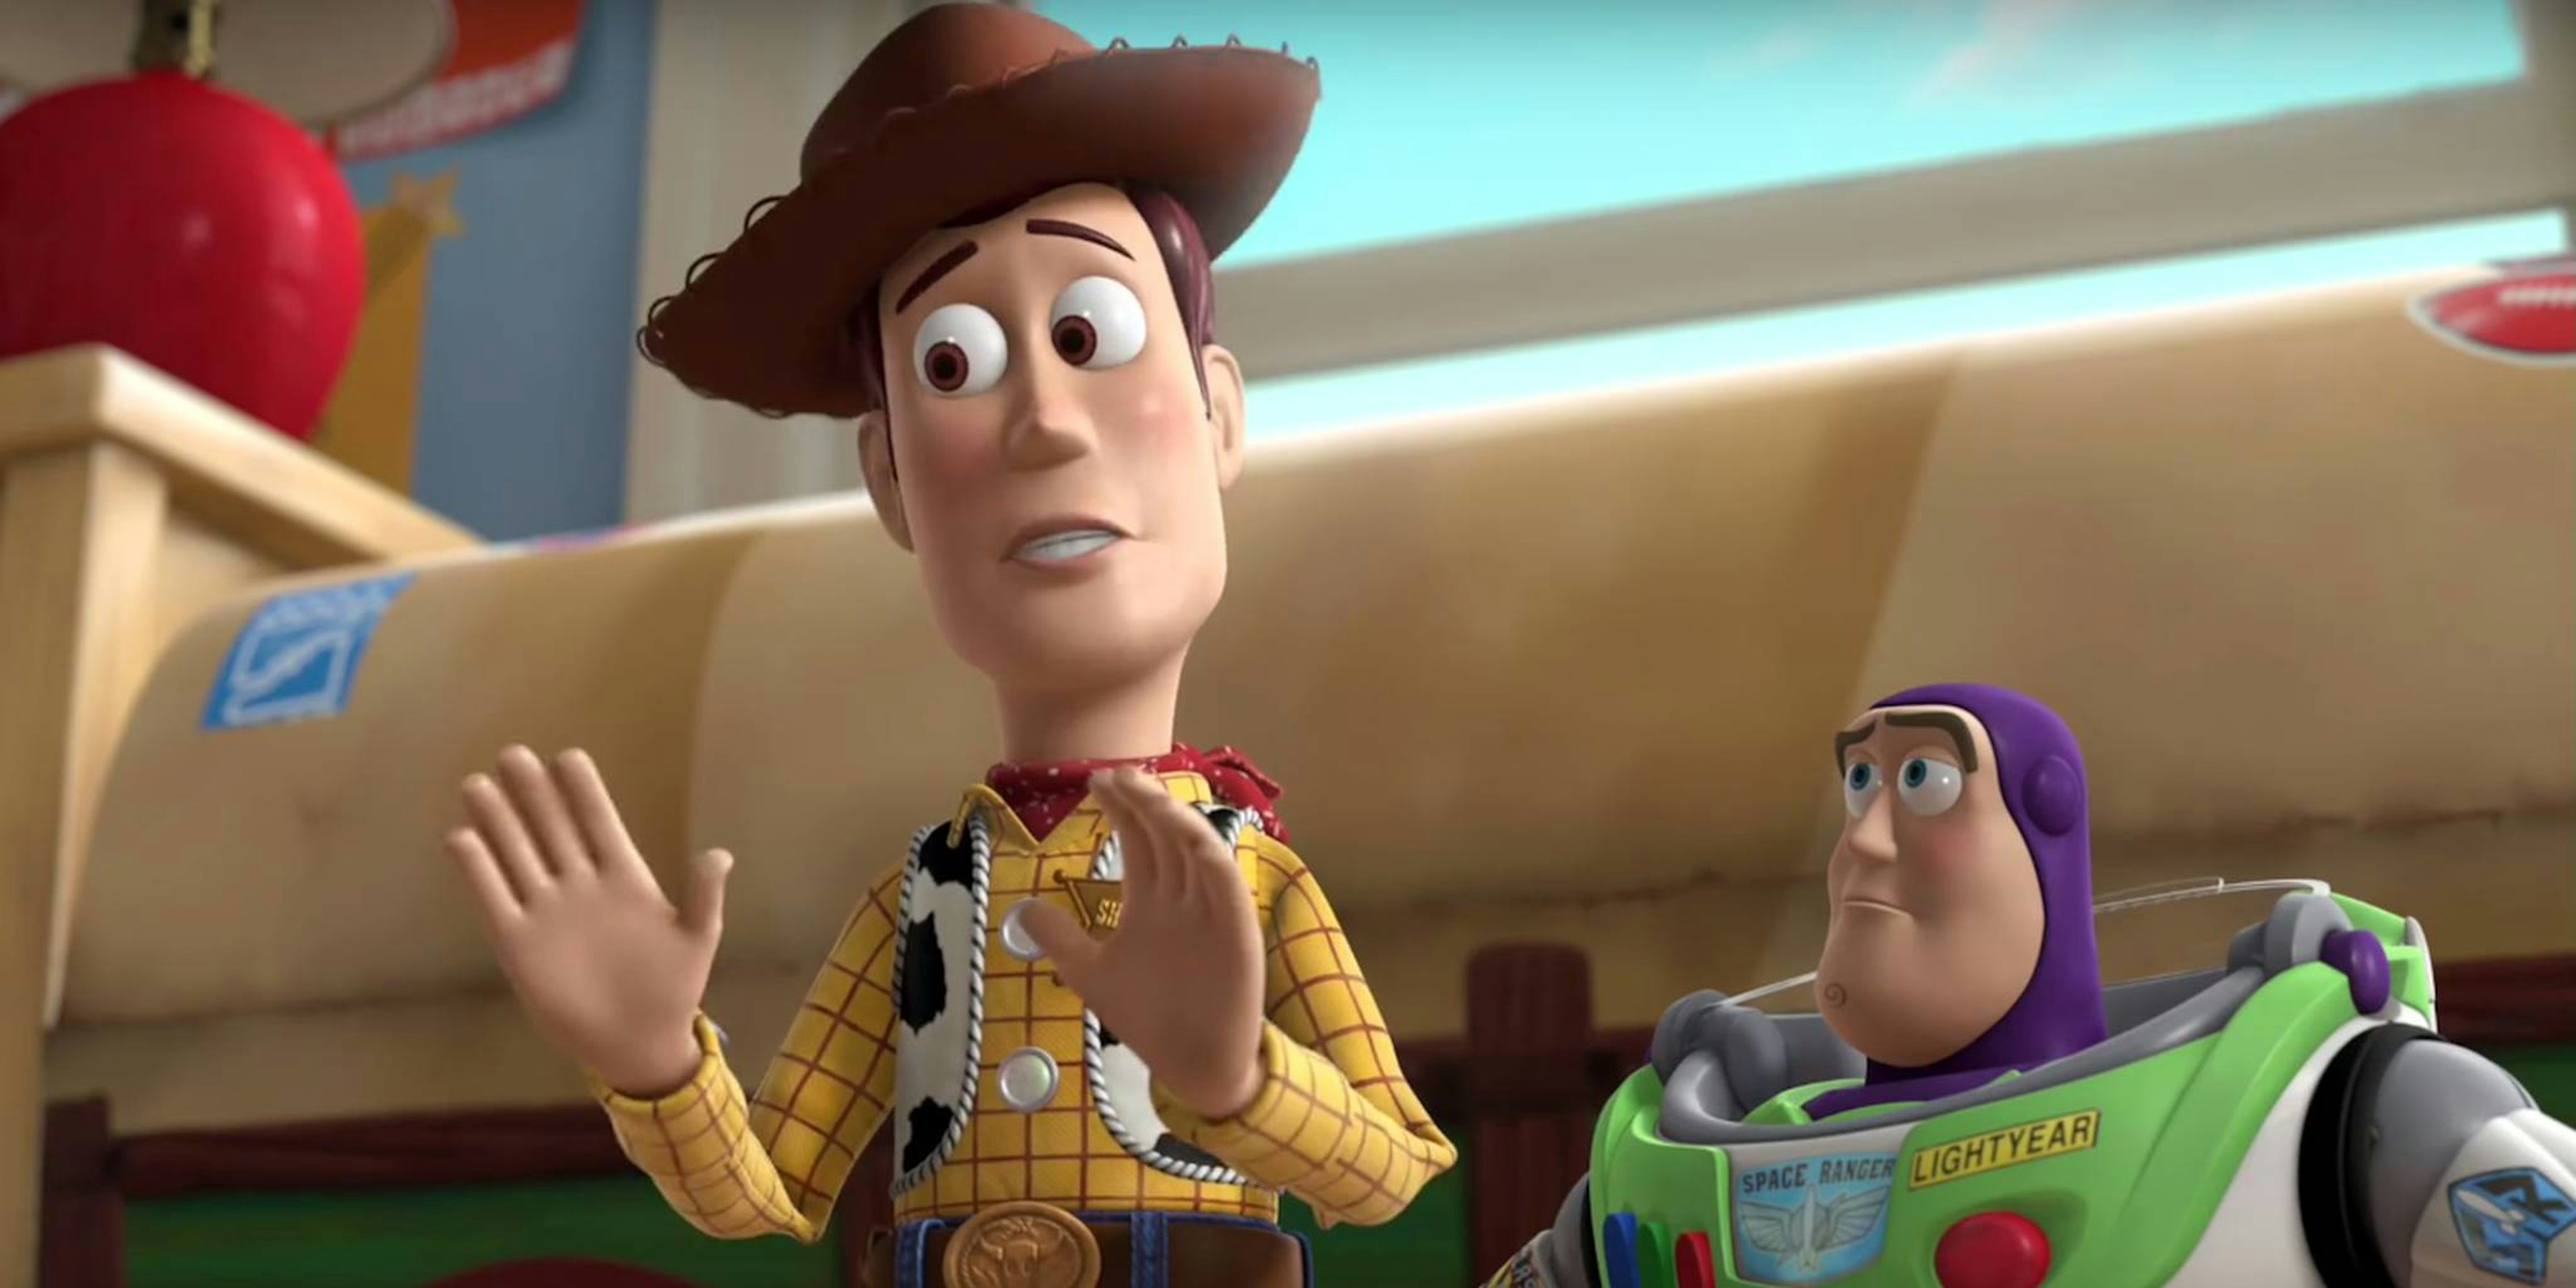 Pixar movie schedule: Toy Story 3